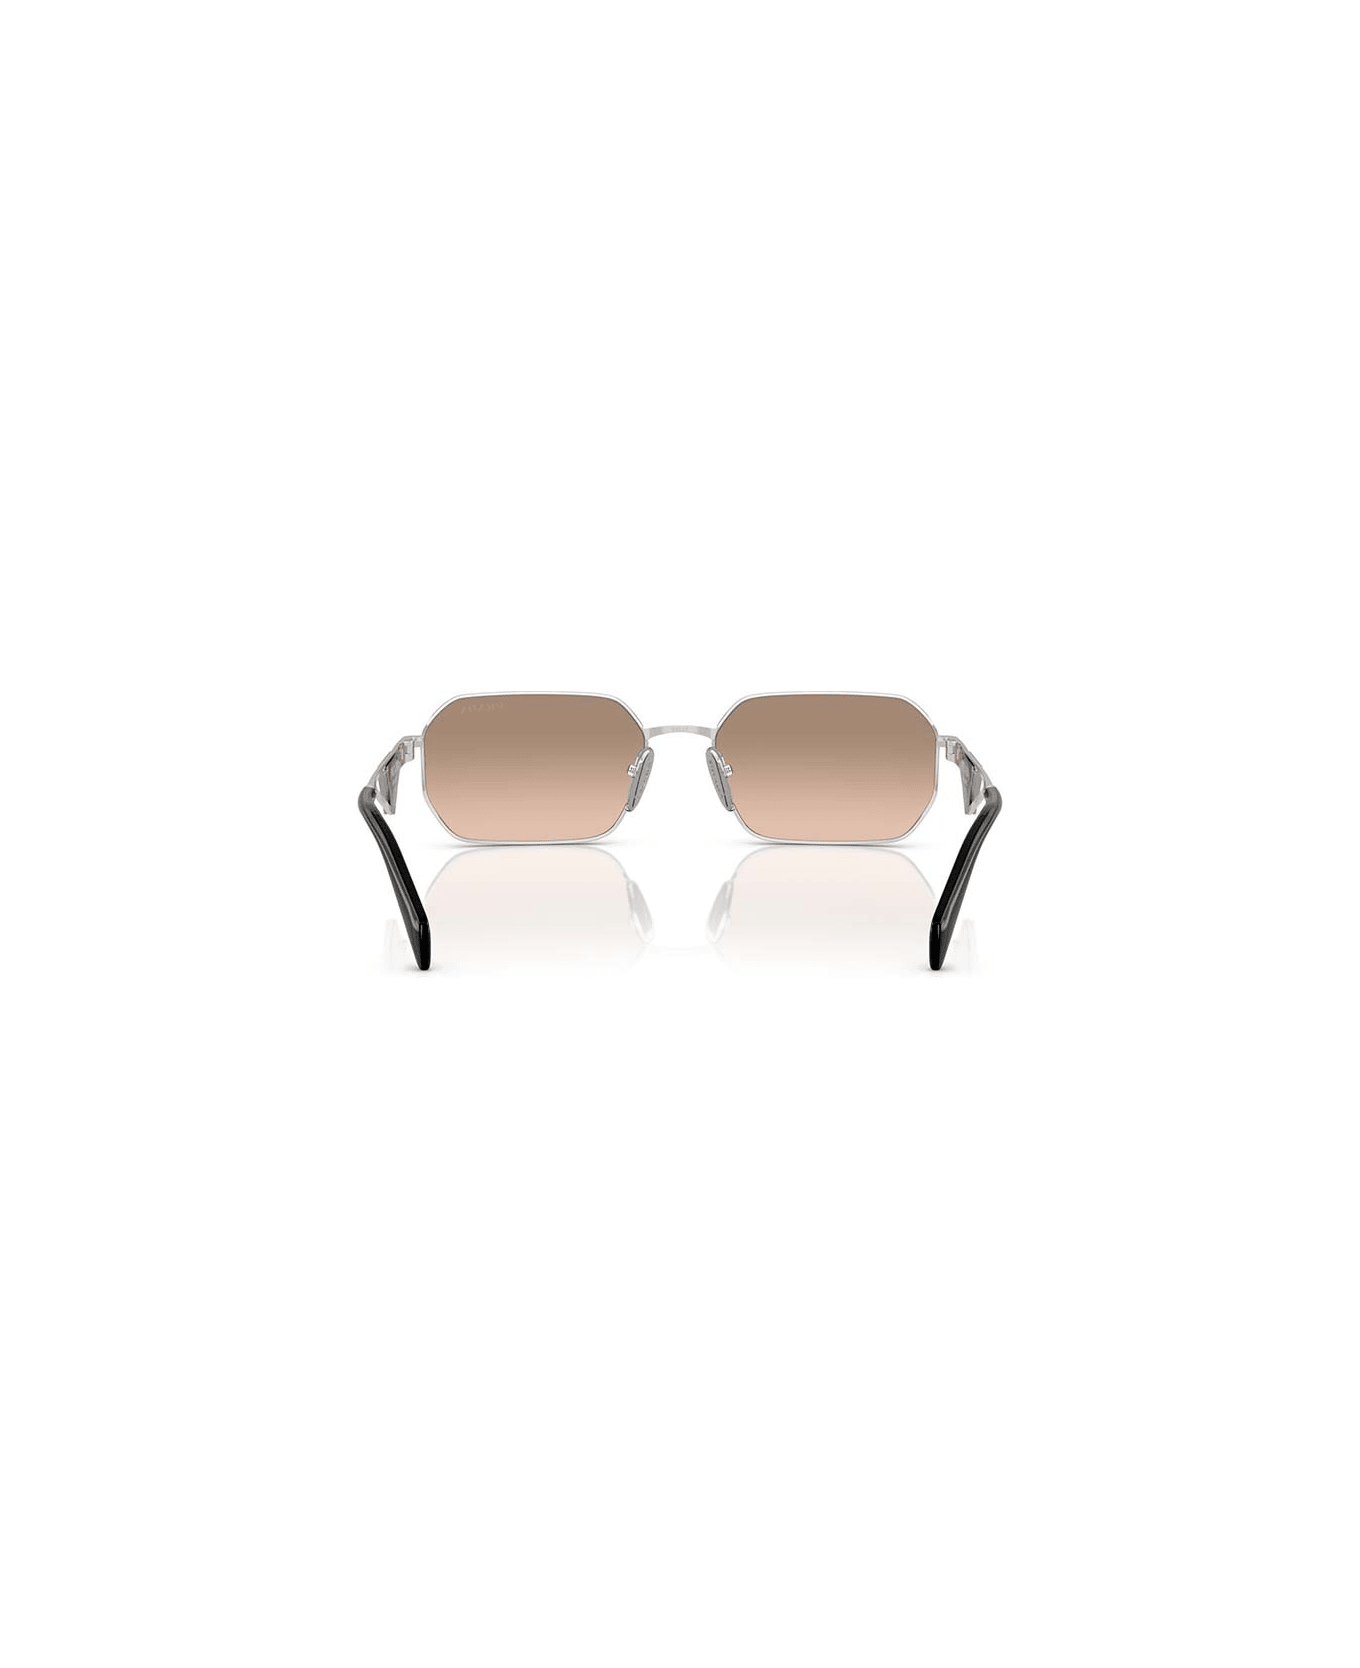 Prada Eyewear Eyewear - Argento/Marrone sfumato